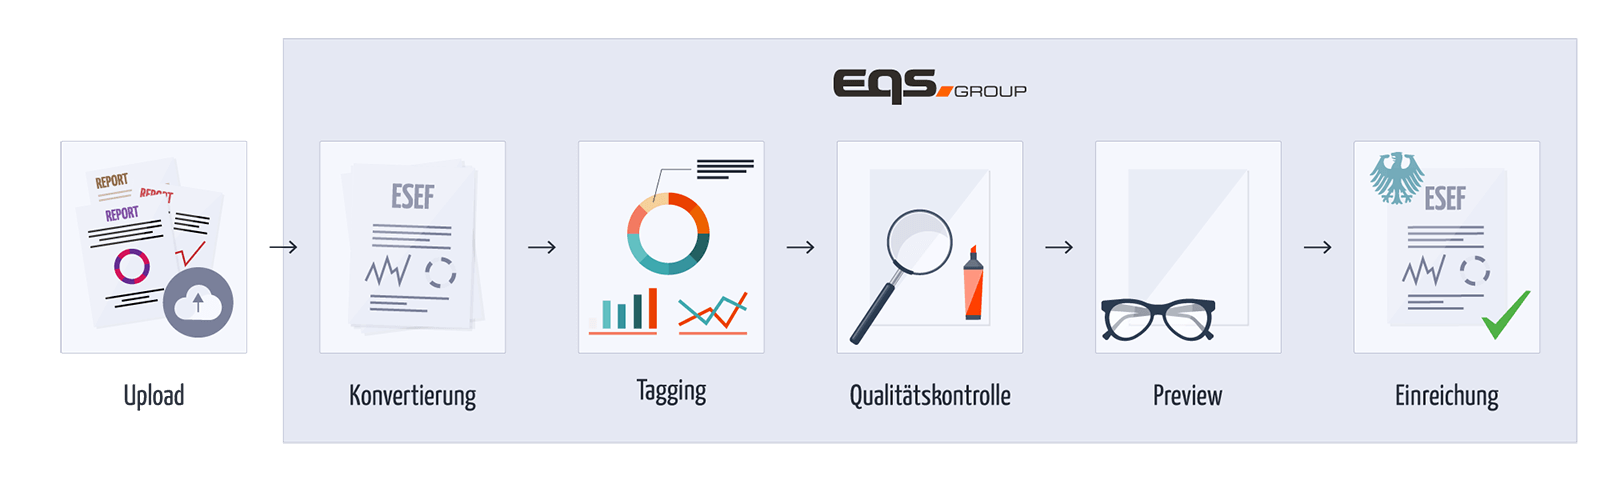 ESEF-Service Workflow | EQS Group